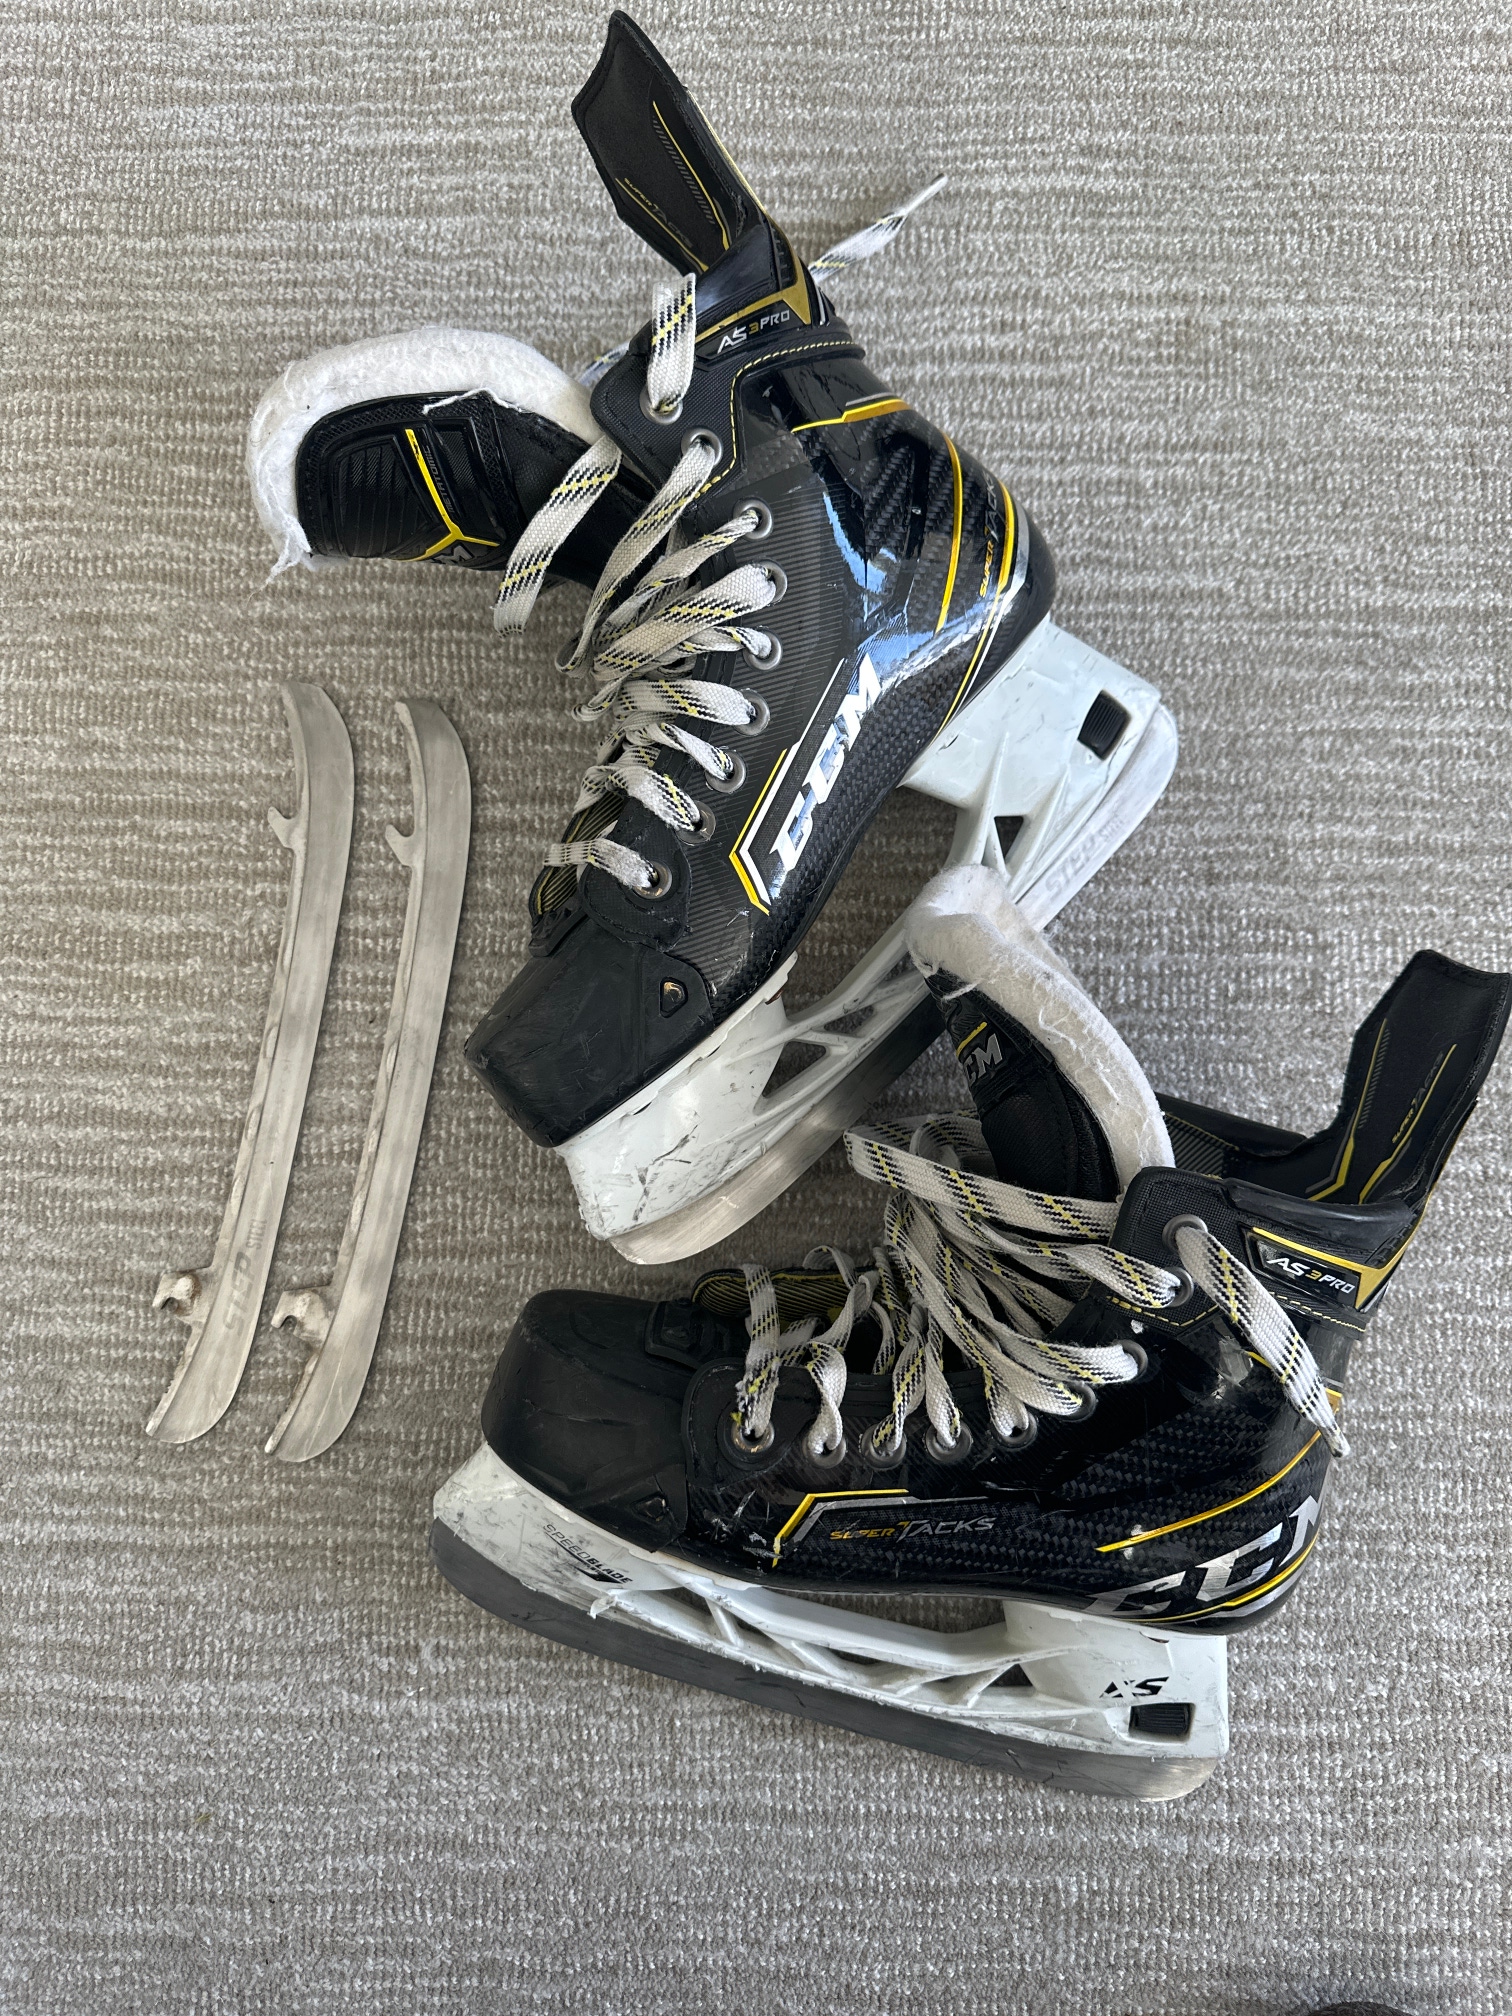 Intermediate Used CCM Super Tacks AS3 Pro Hockey Skates Regular Width Size 4.5